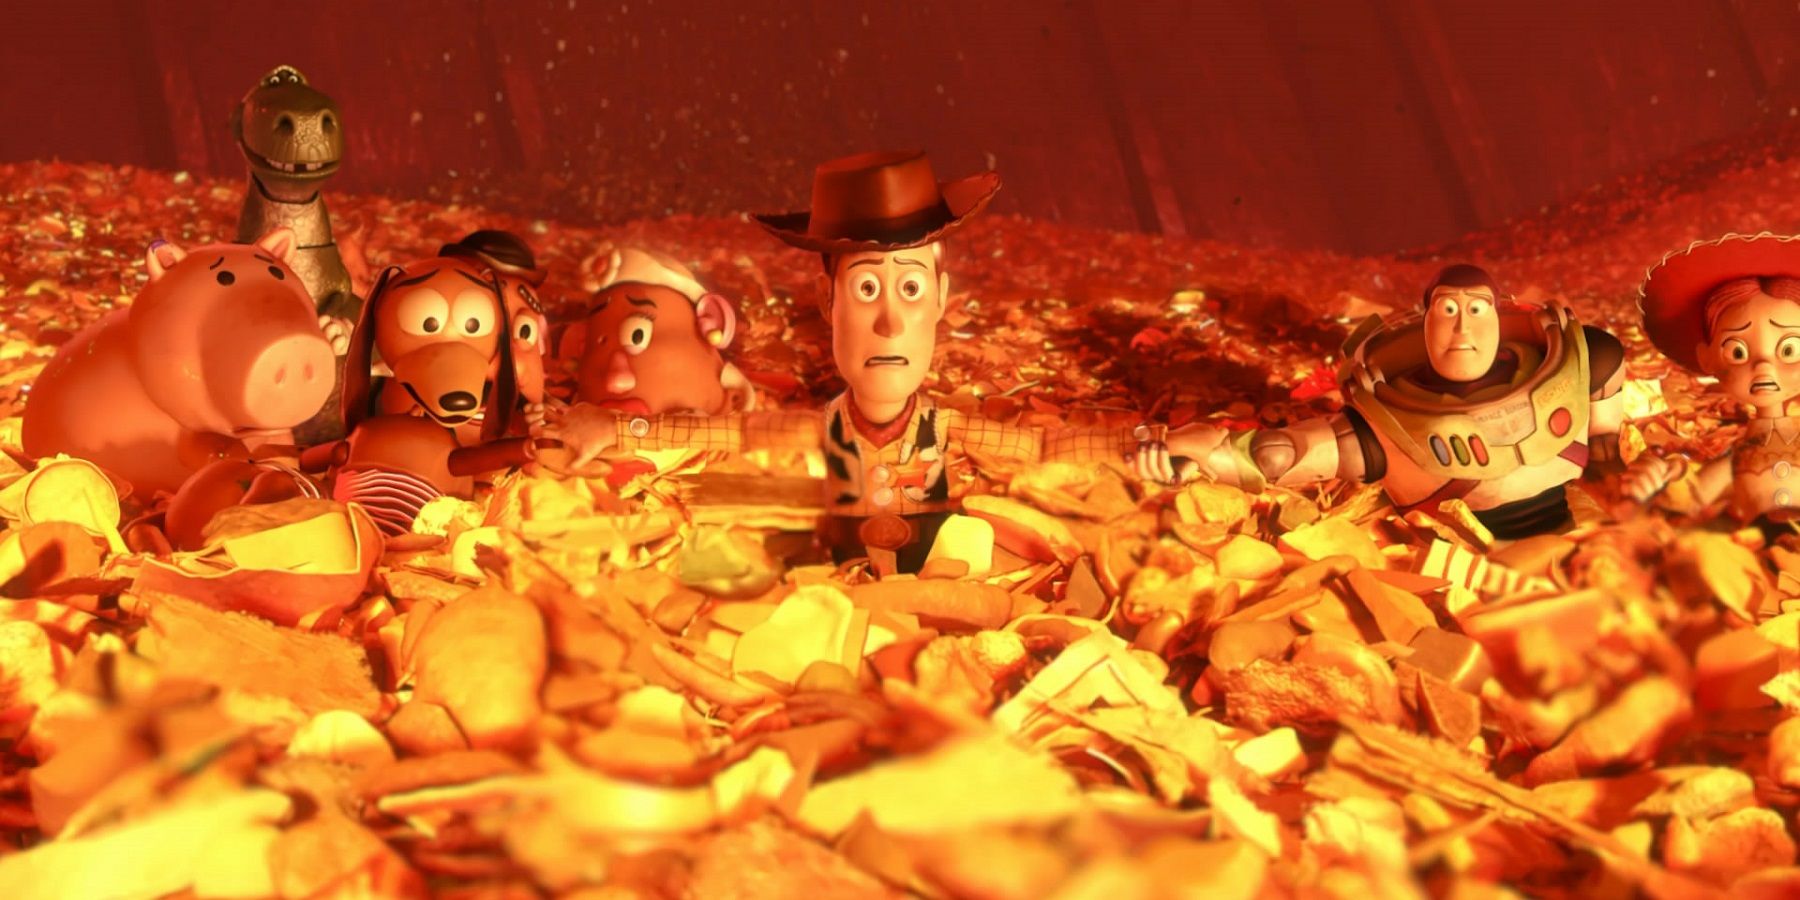 Toy-Story-3-Incinerator-Scene.jpg